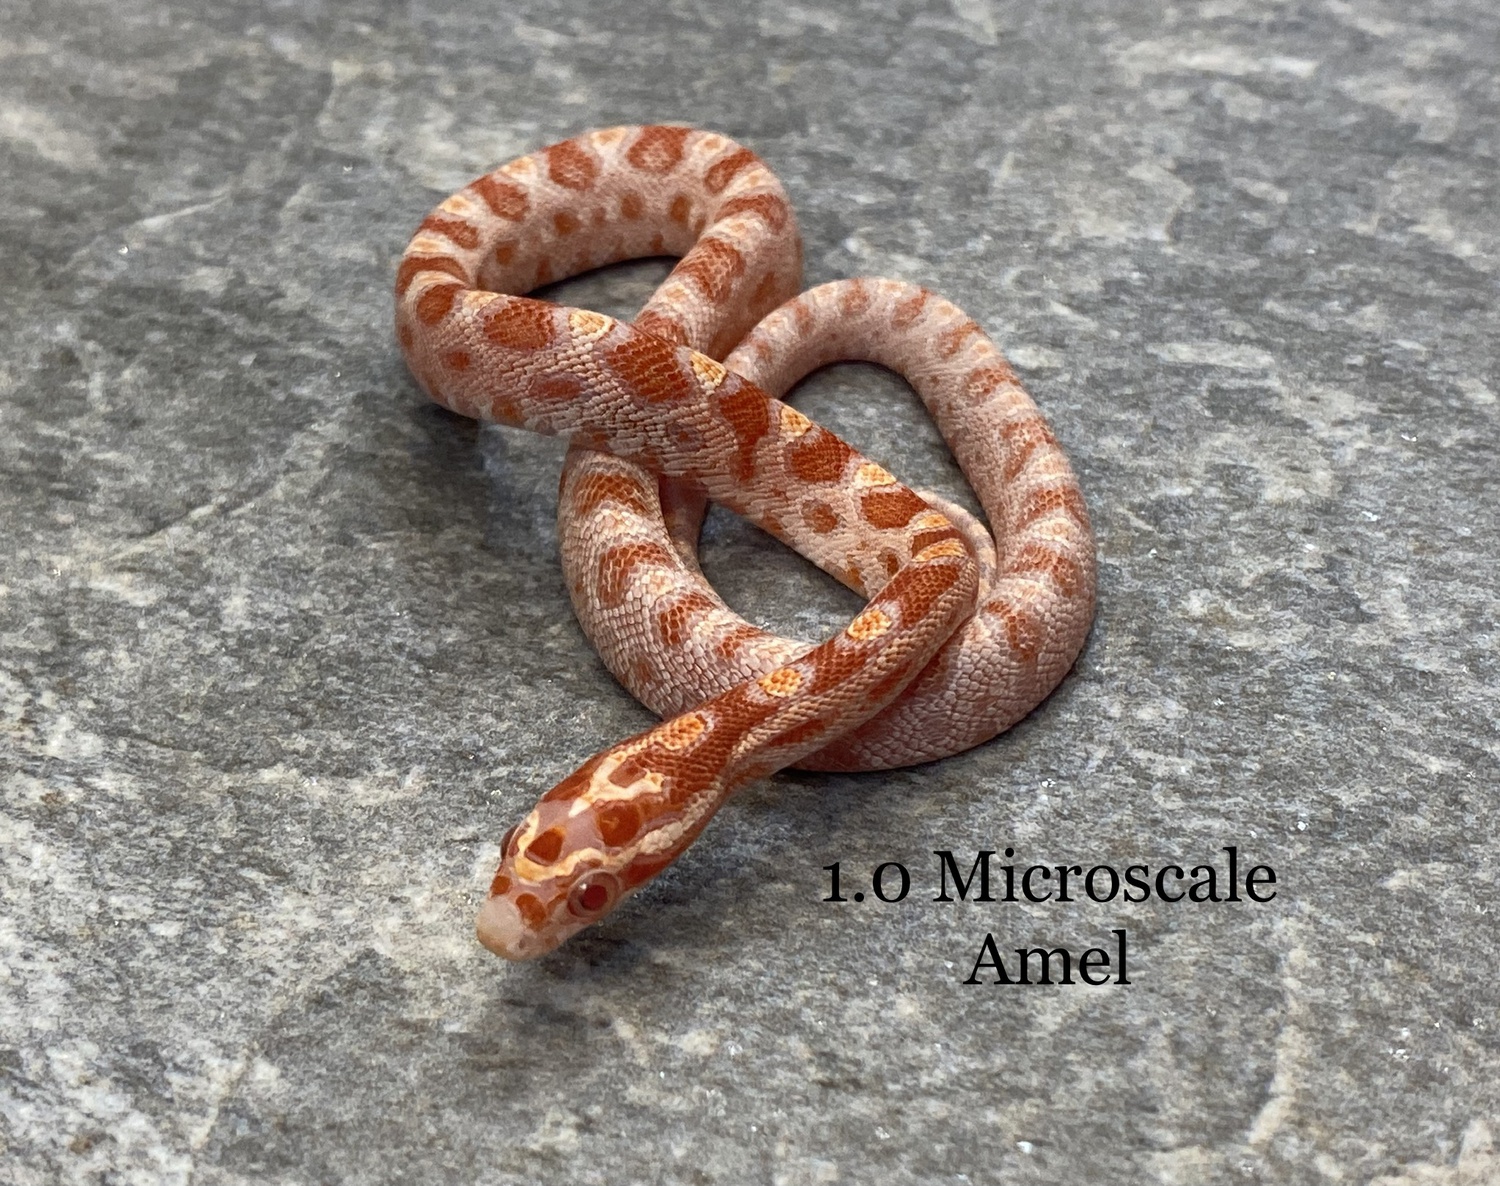 Microscale Amel 66% Het Anery, Motley Or Stripe Corn Snake by PrestigeCornsUK